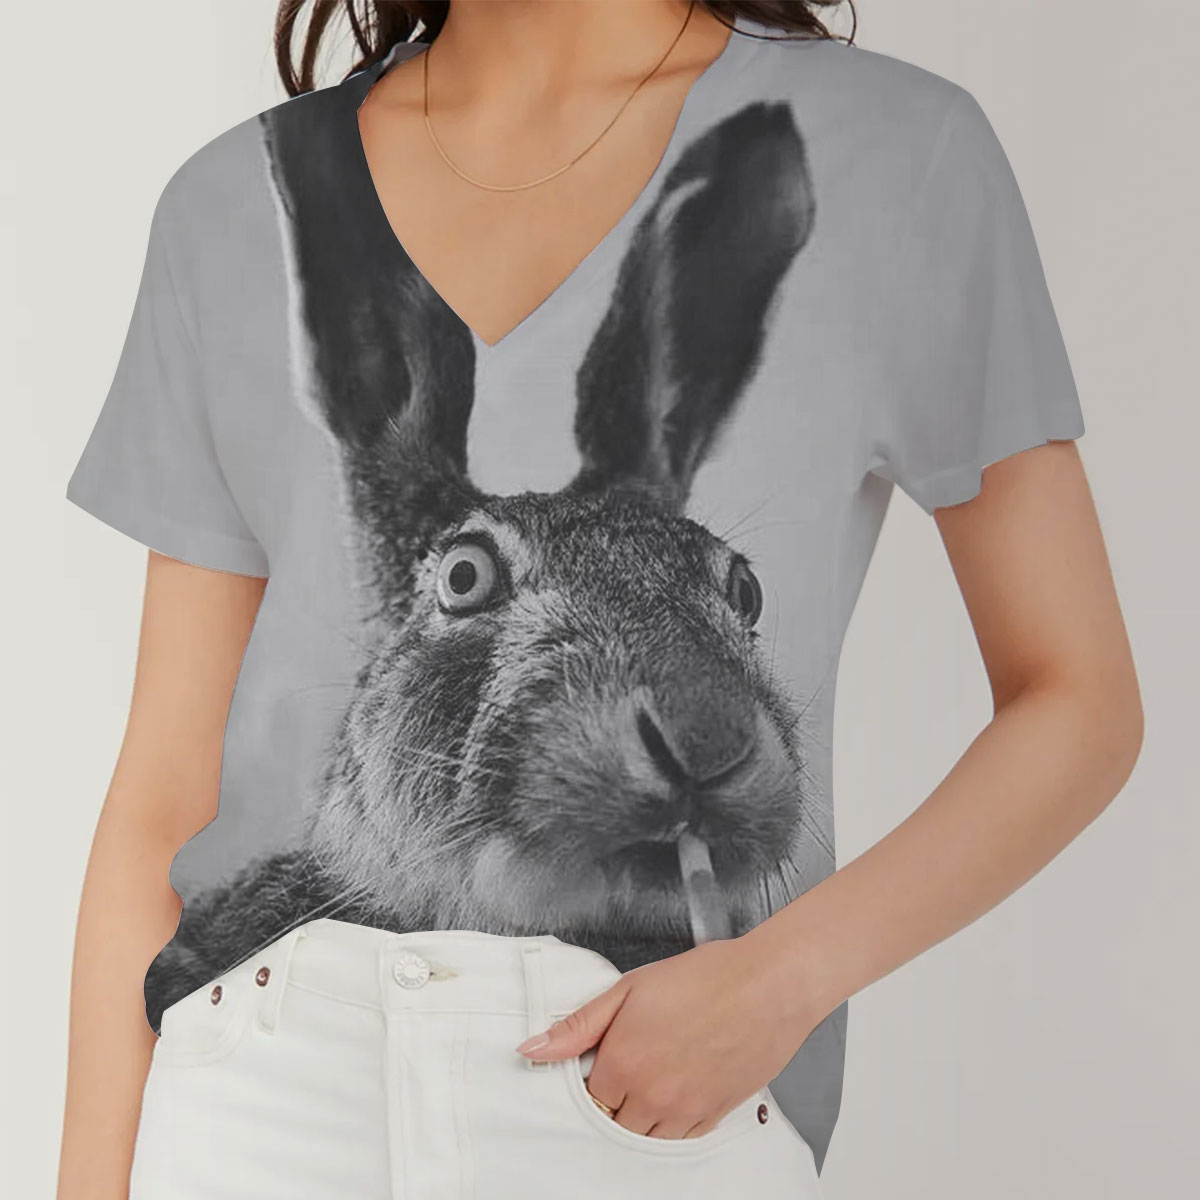 Smoking Rabbit V-Neck Women's T-Shirt